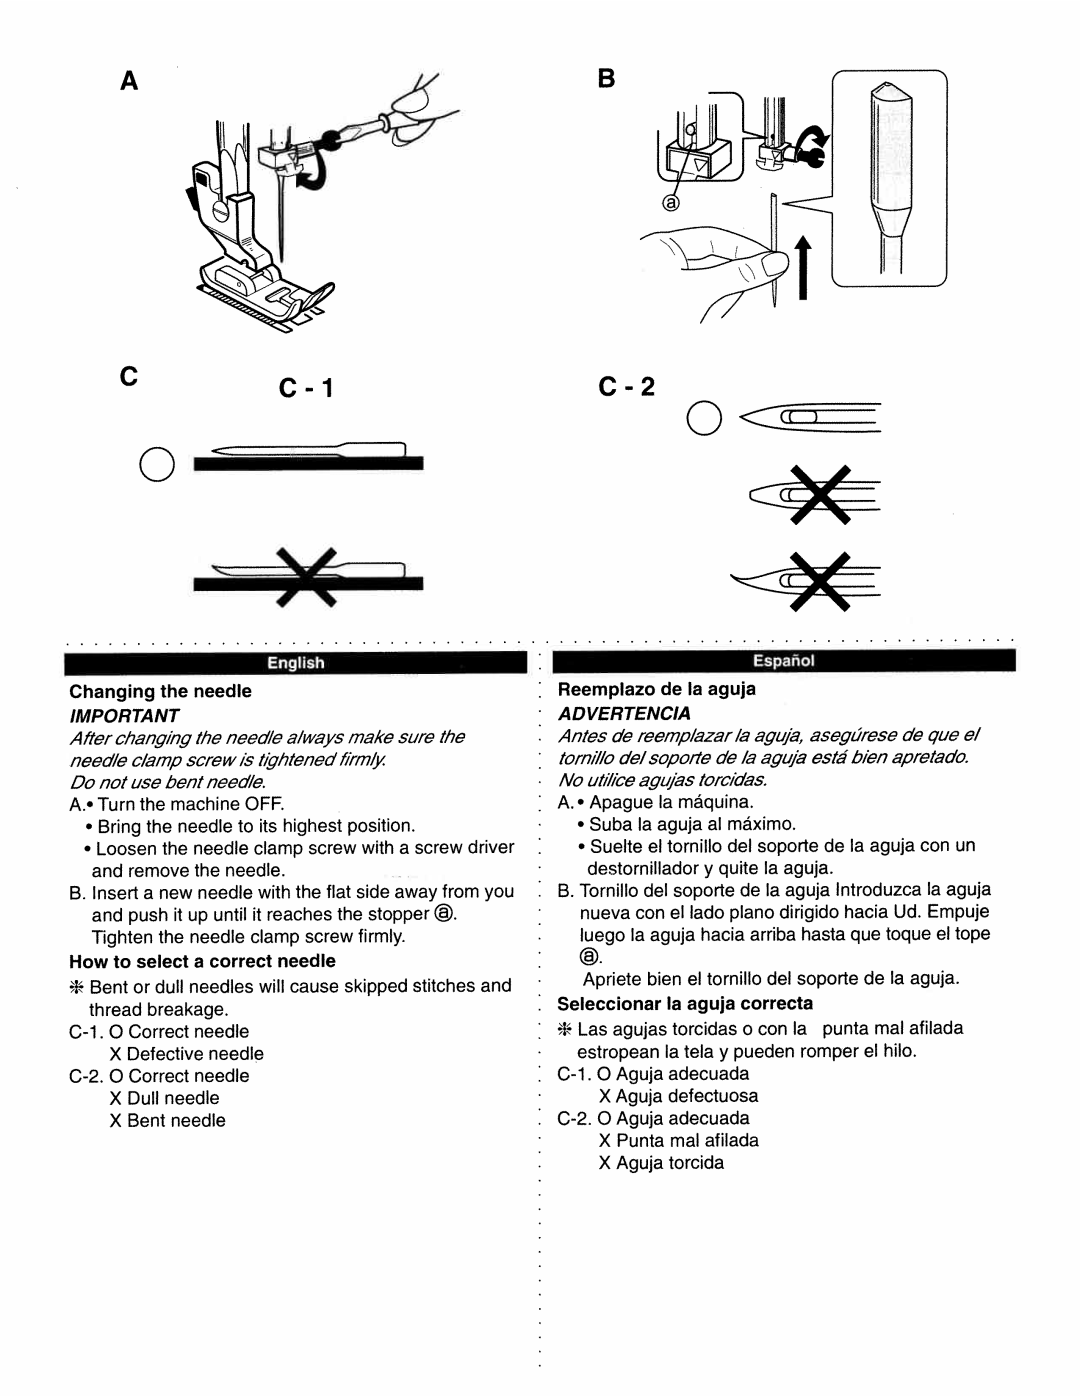 White 1780 manual How to select a correct needle, Seleccionar Ia aguja correcta 